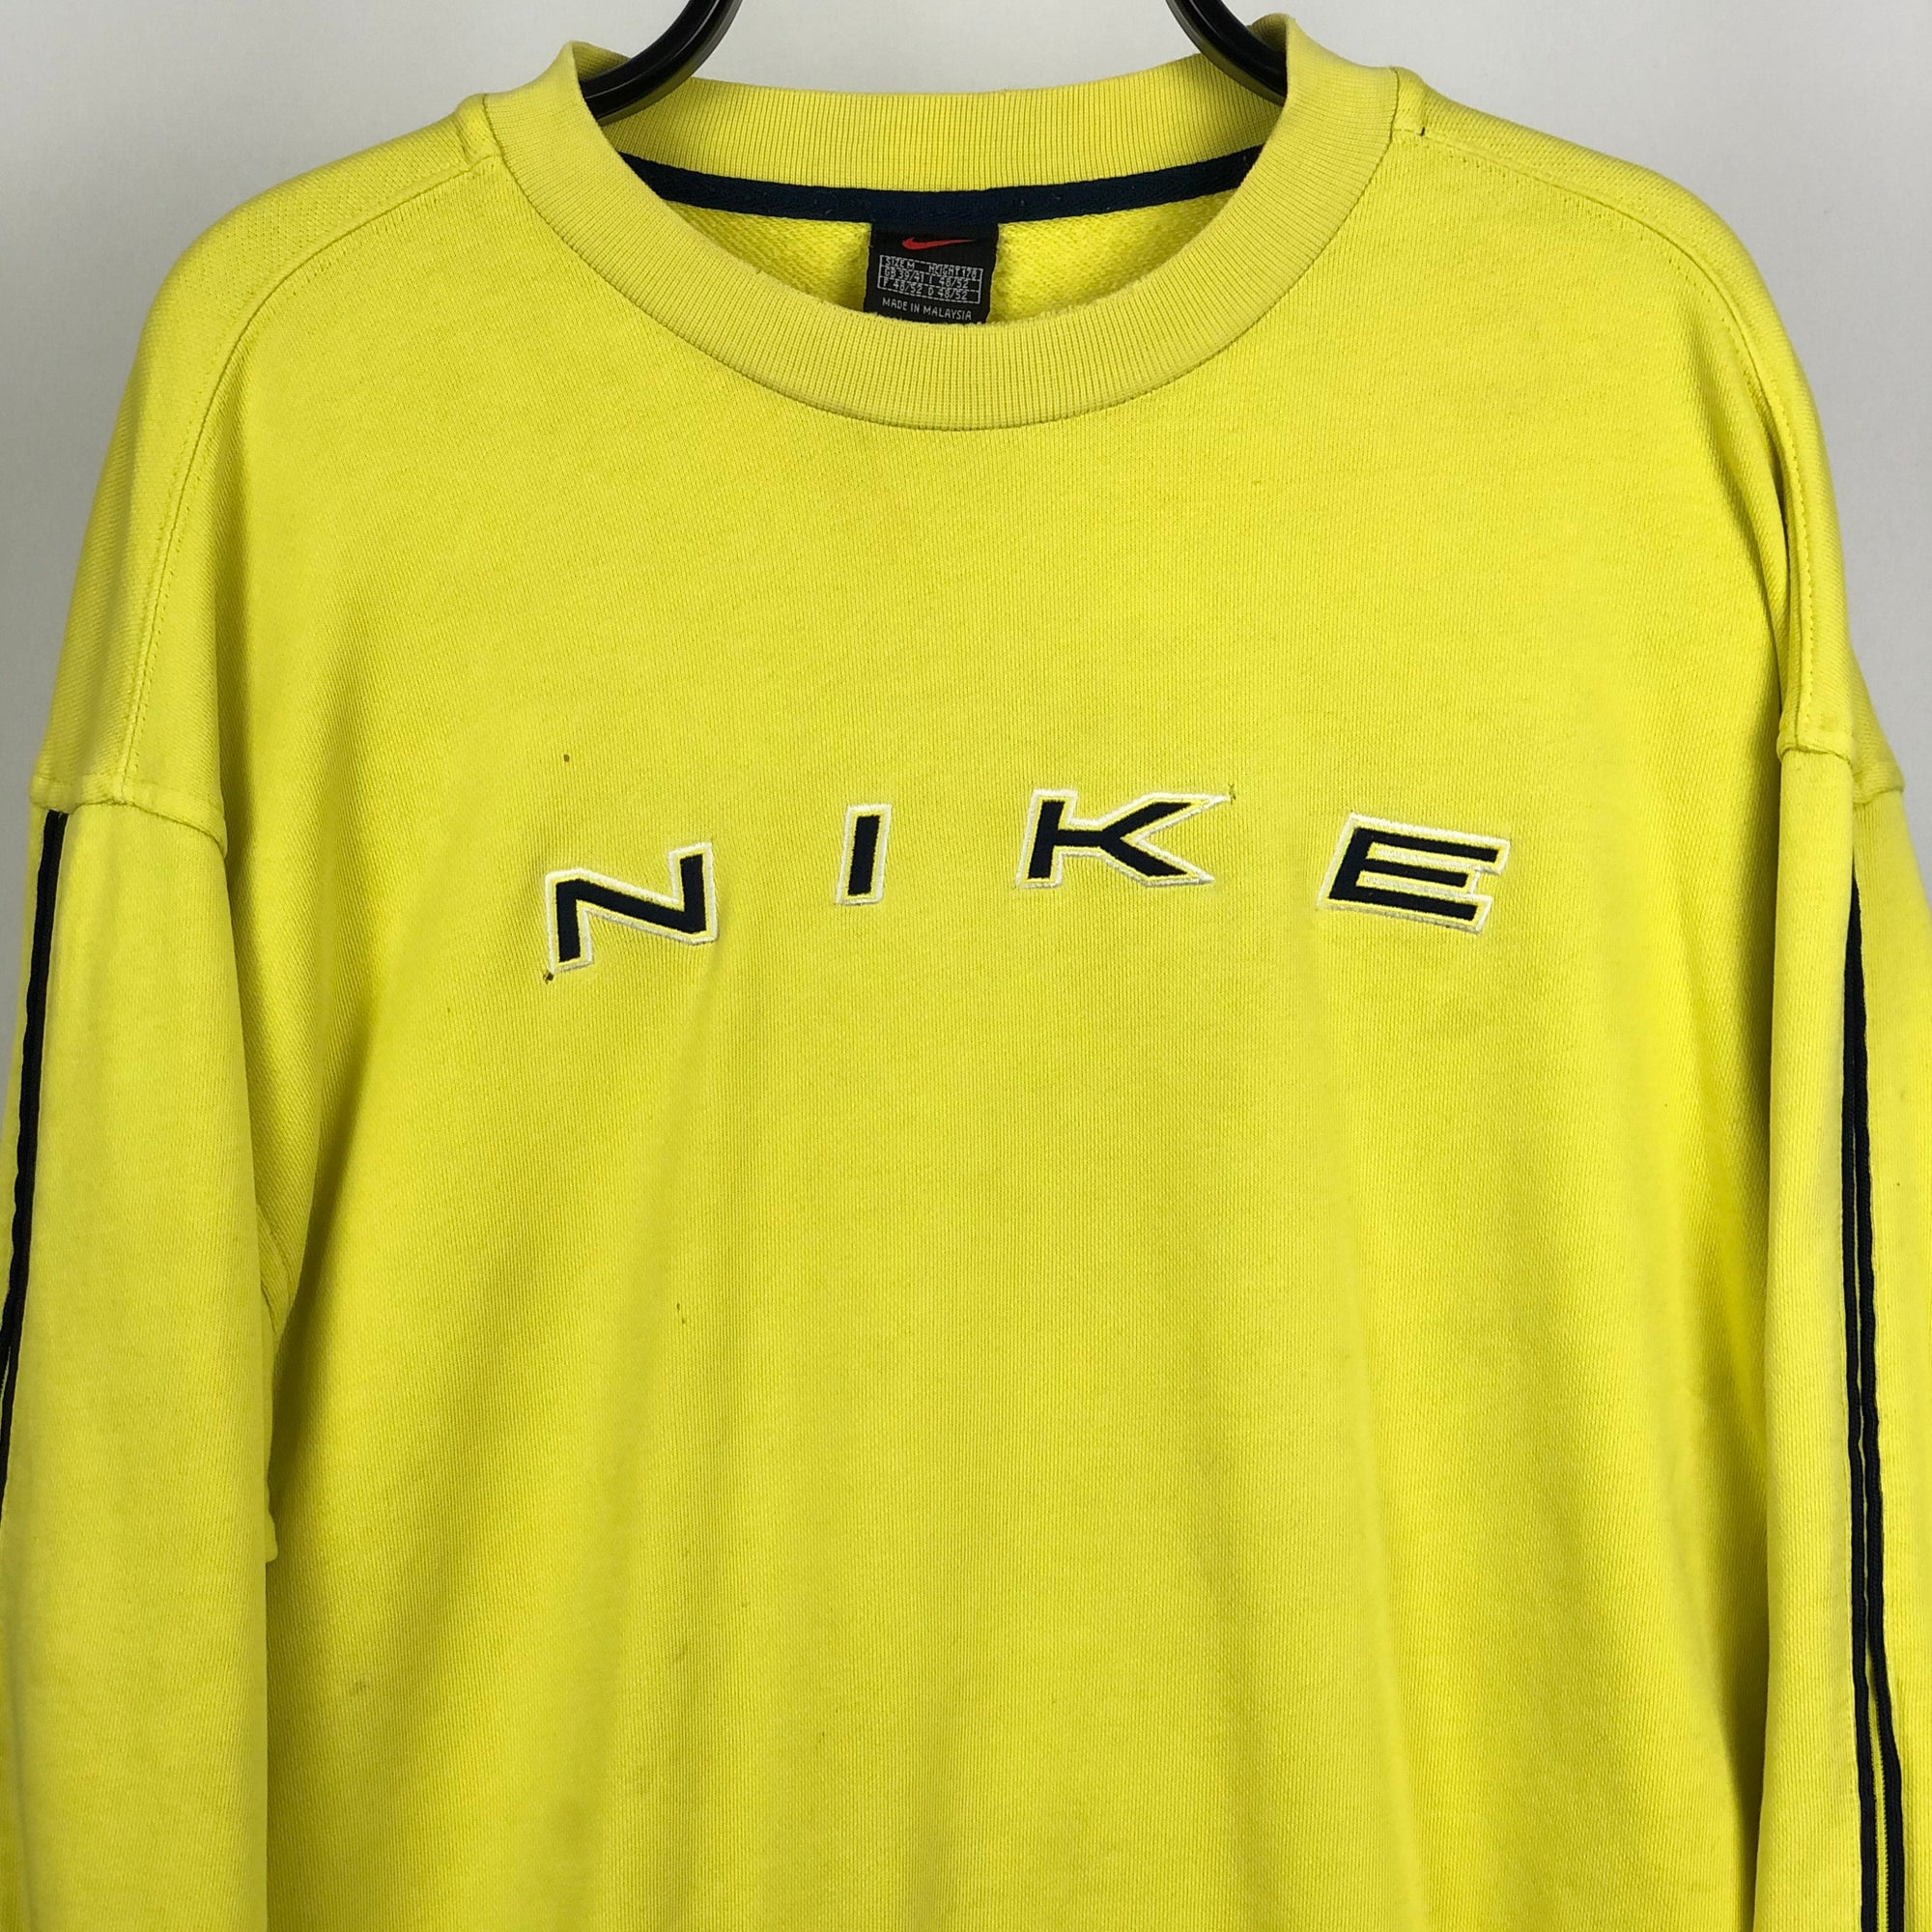 Vintage 90s Nike Spellout Sweatshirt in Volt Yellow - Men's Medium/Women's Large